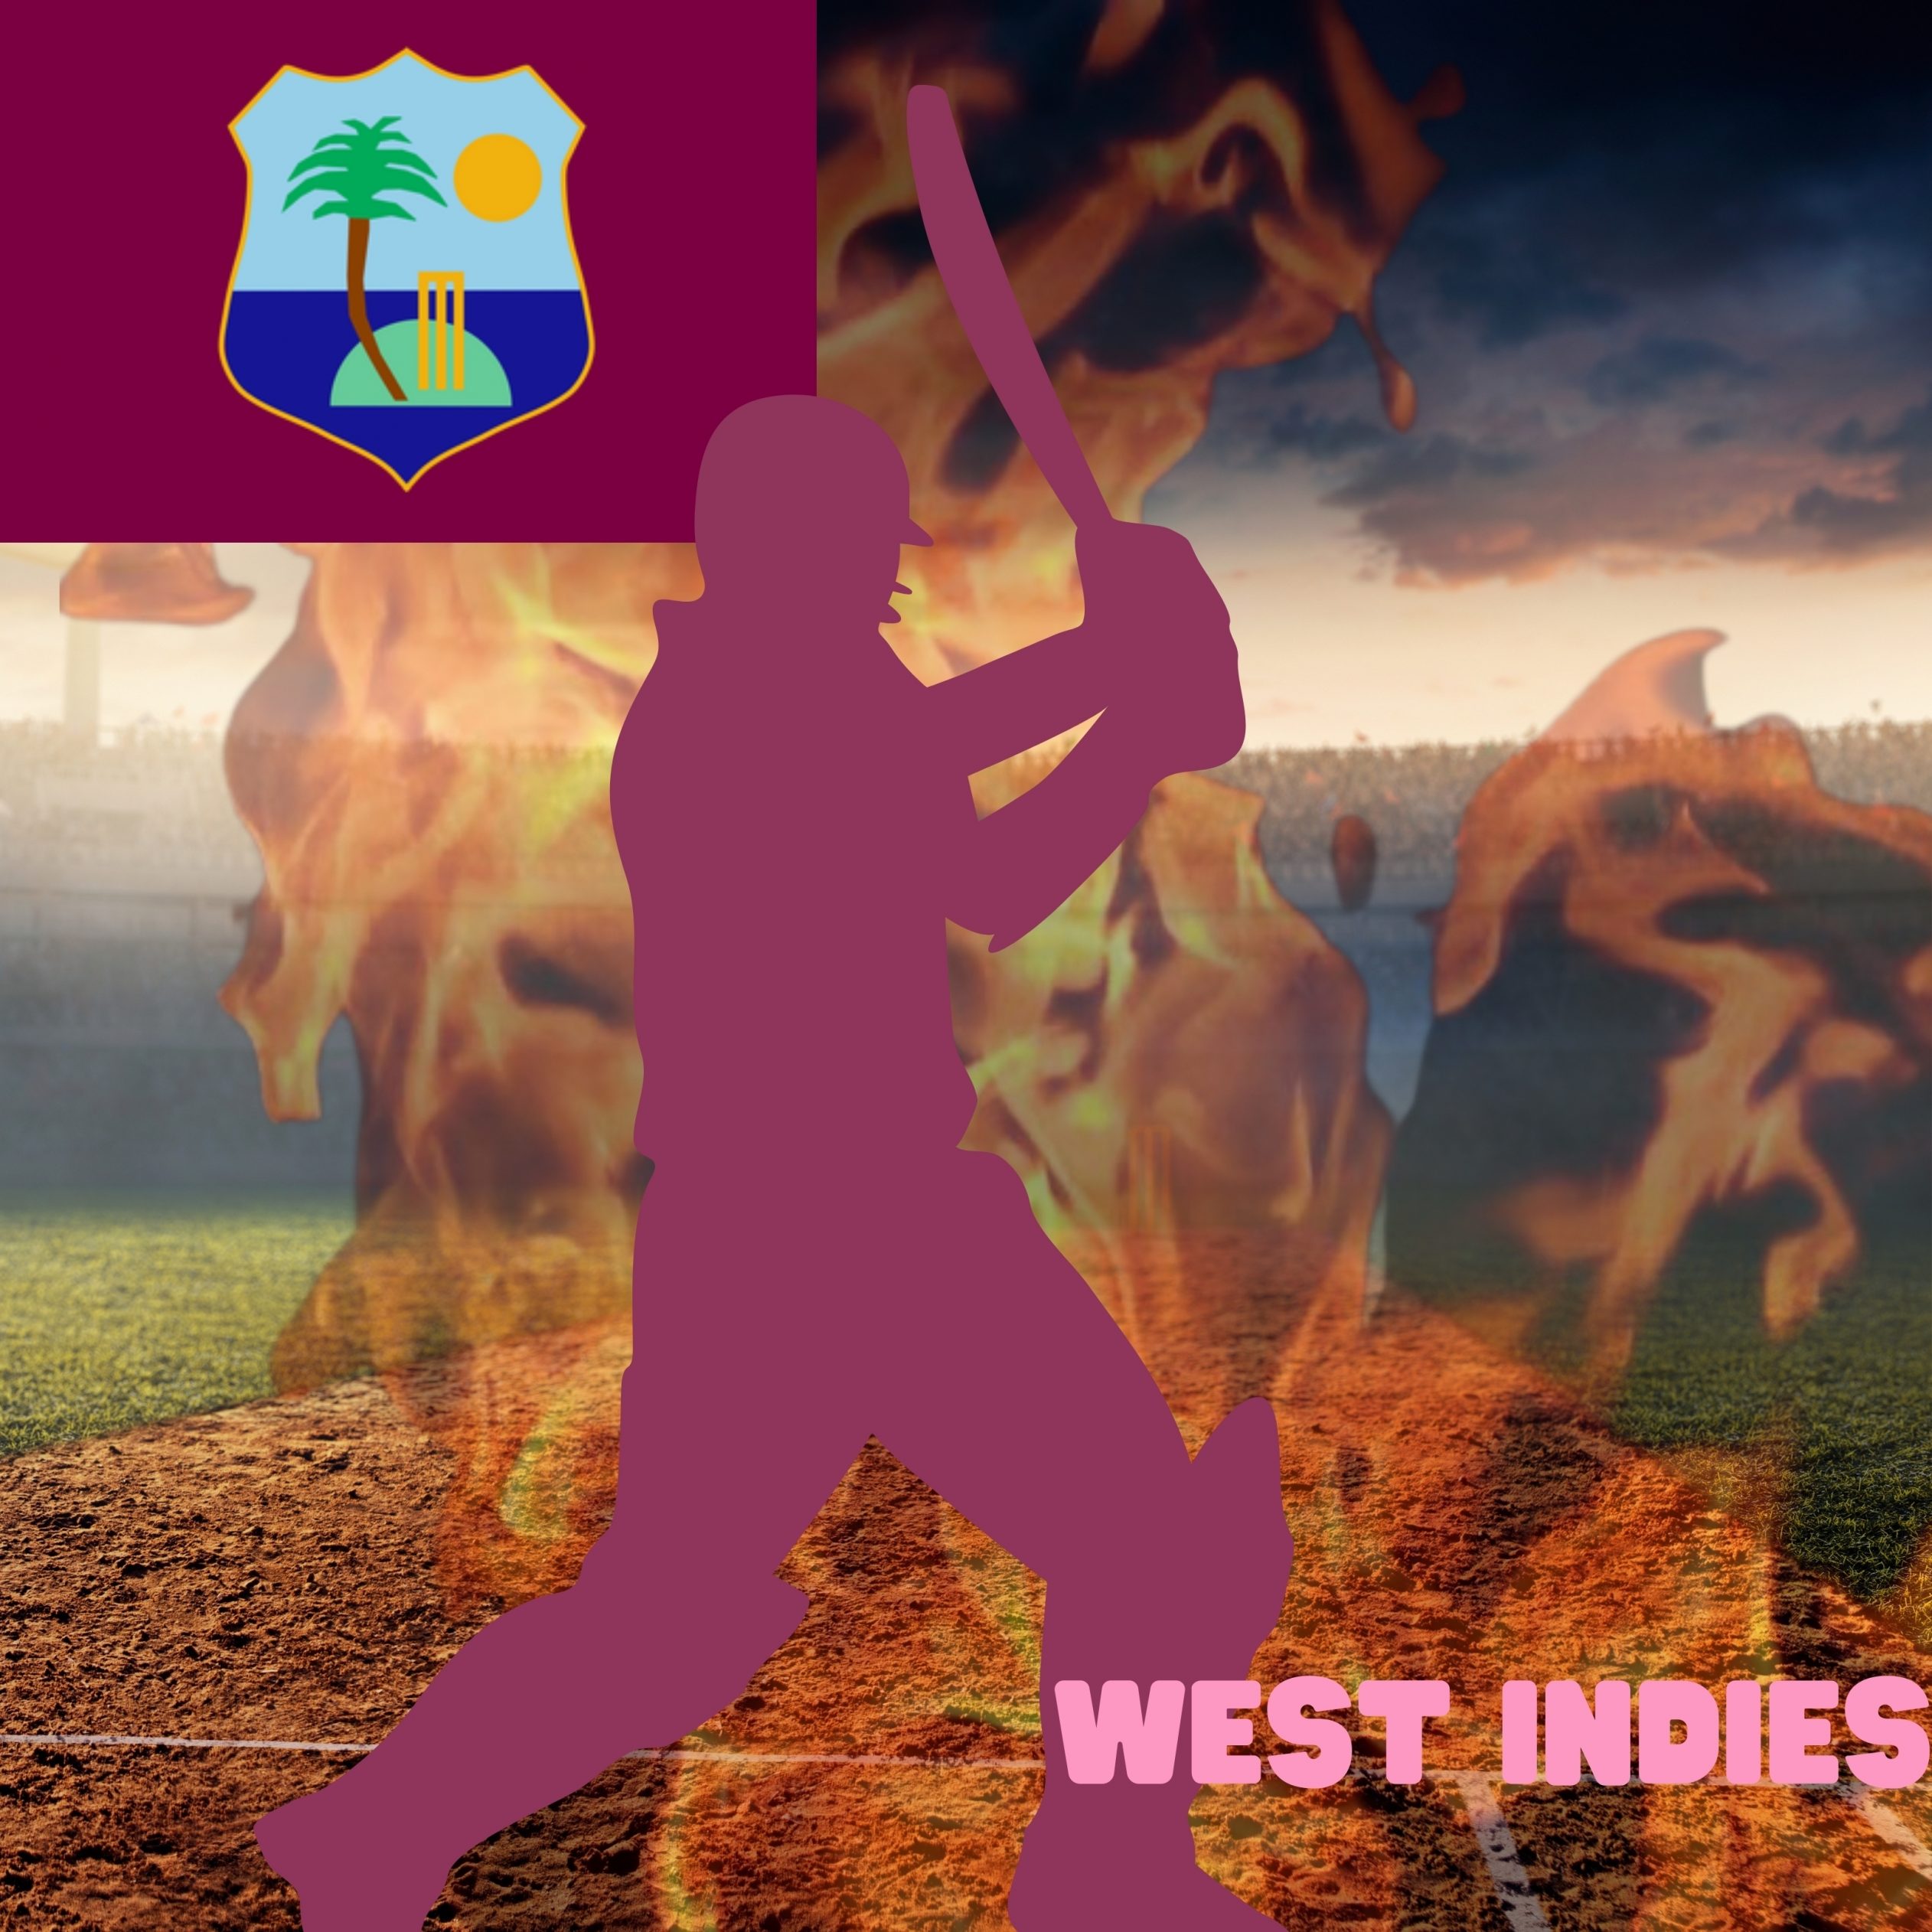 2524x2524 Parallax wallpaper 4k West Indies Cricket Stadium iPad Wallpaper 2524x2524 pixels resolution